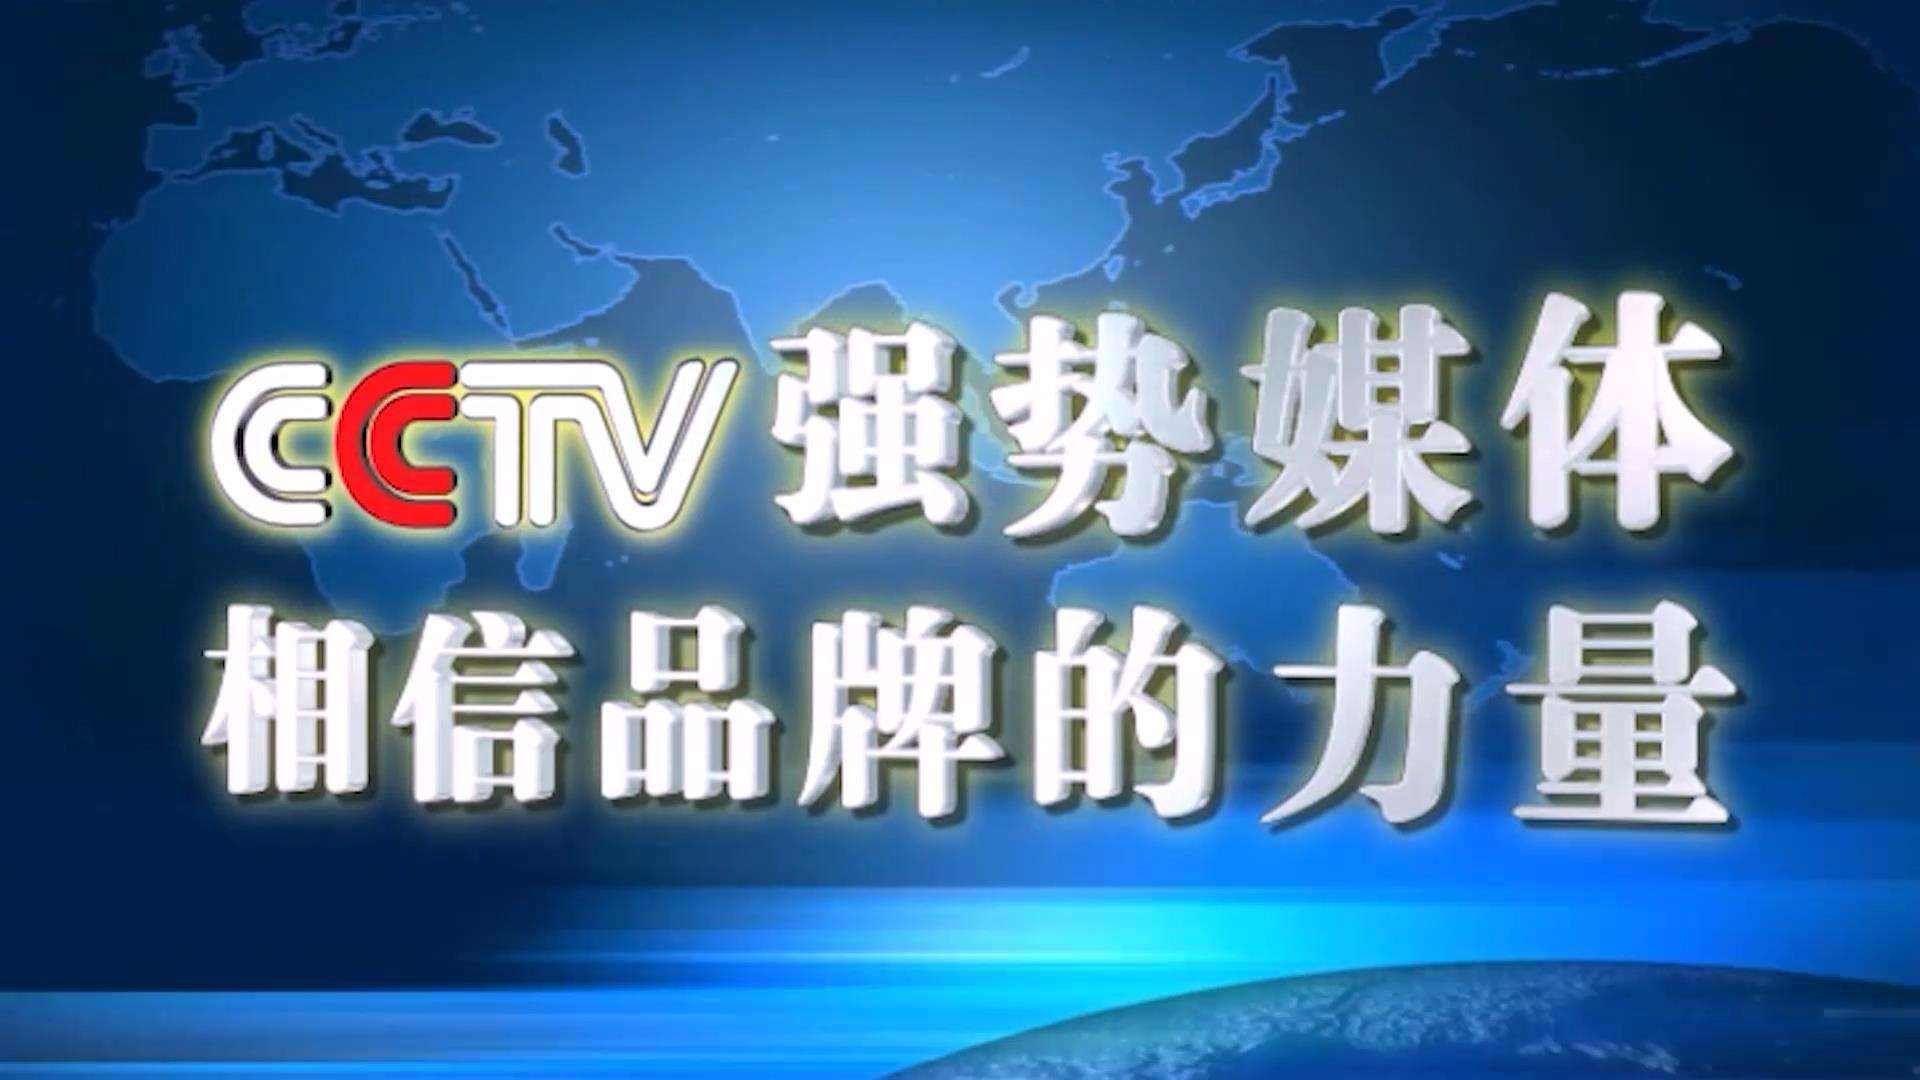  CCTV央视广告投放